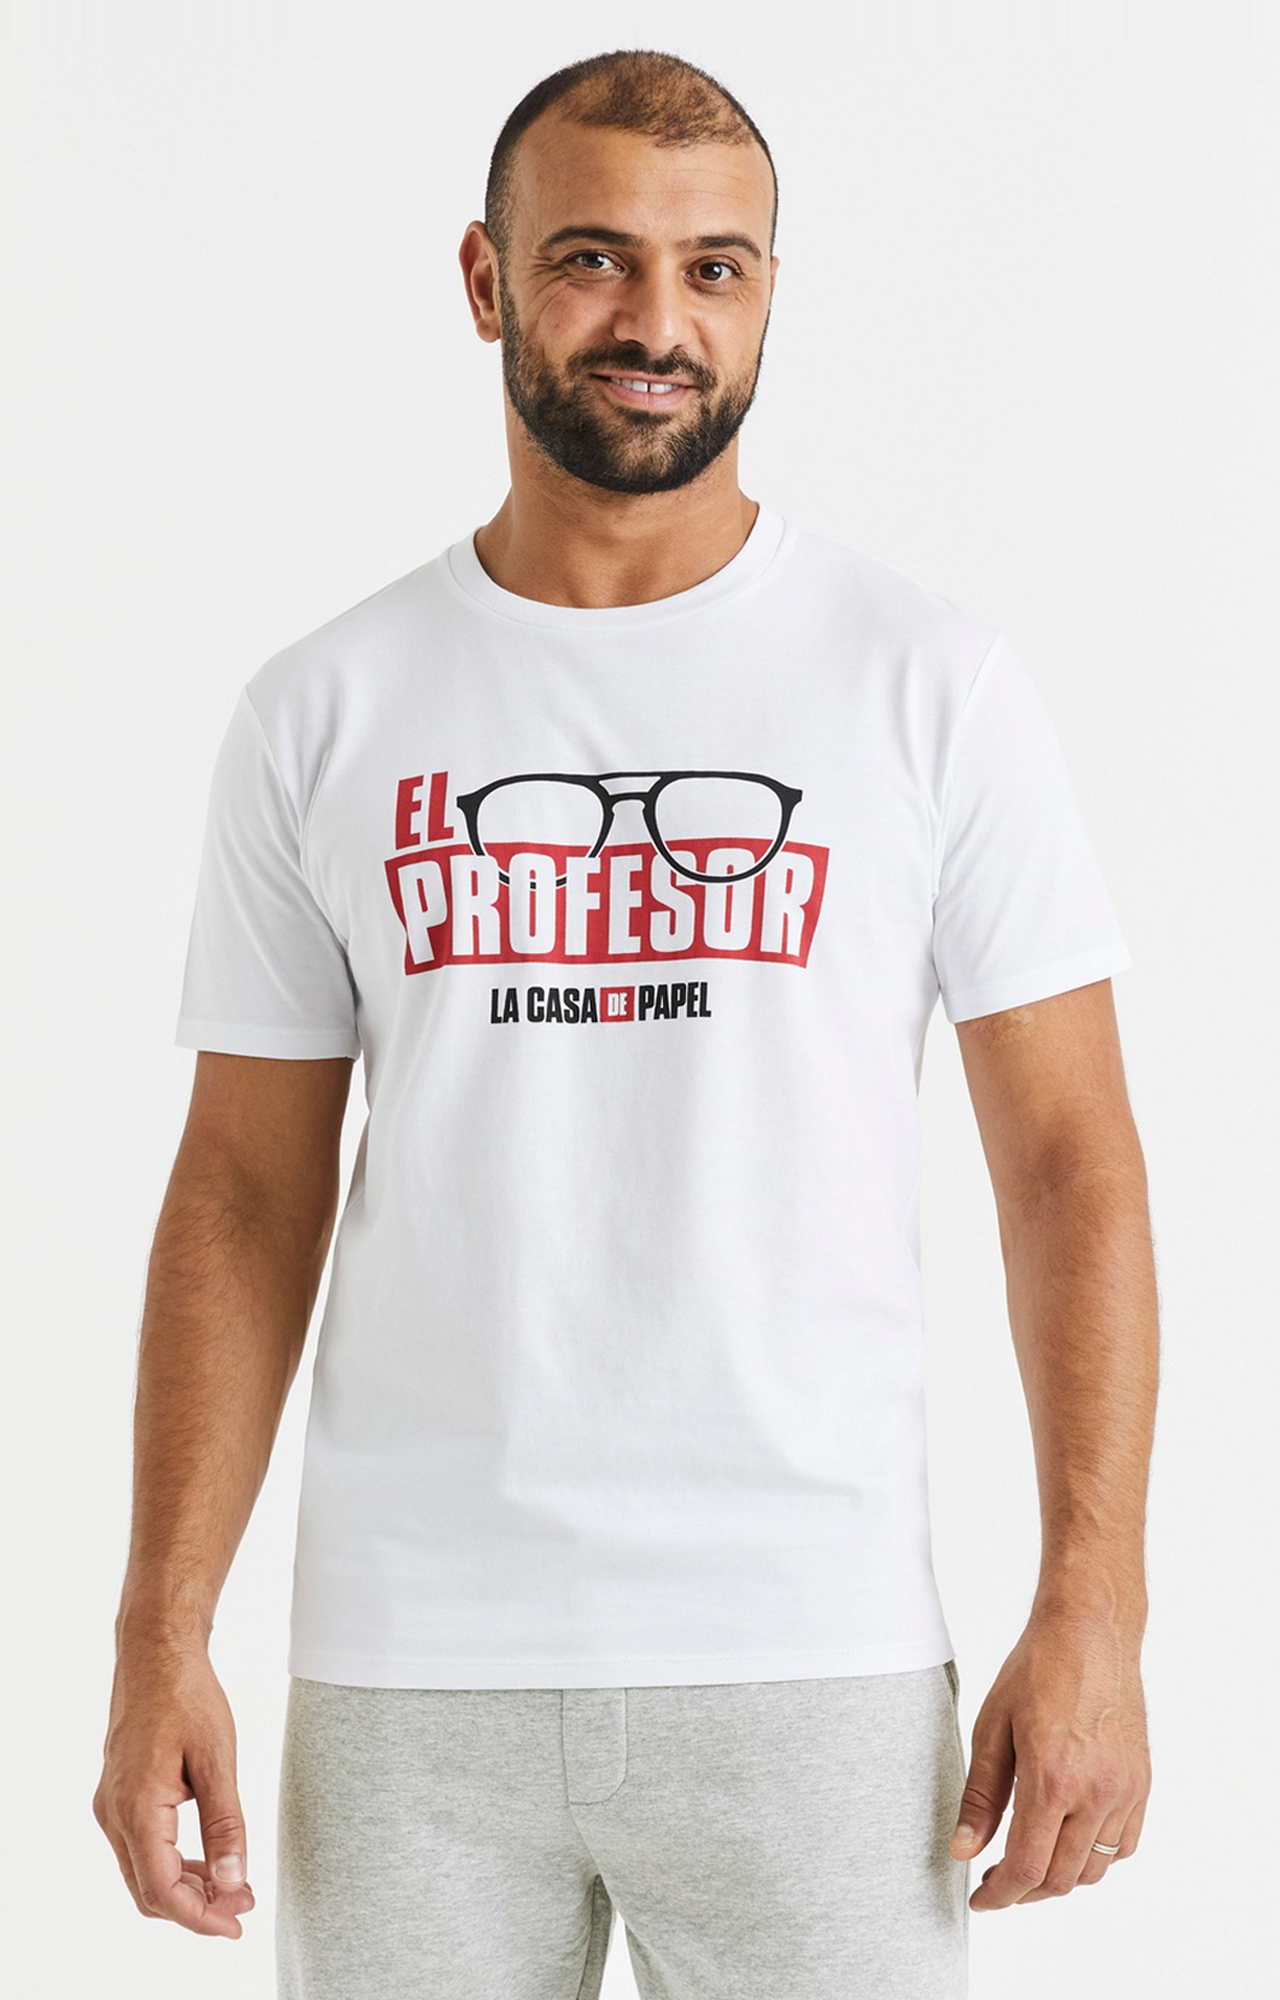 celio | Men's White Printed Regular T-Shirts 0